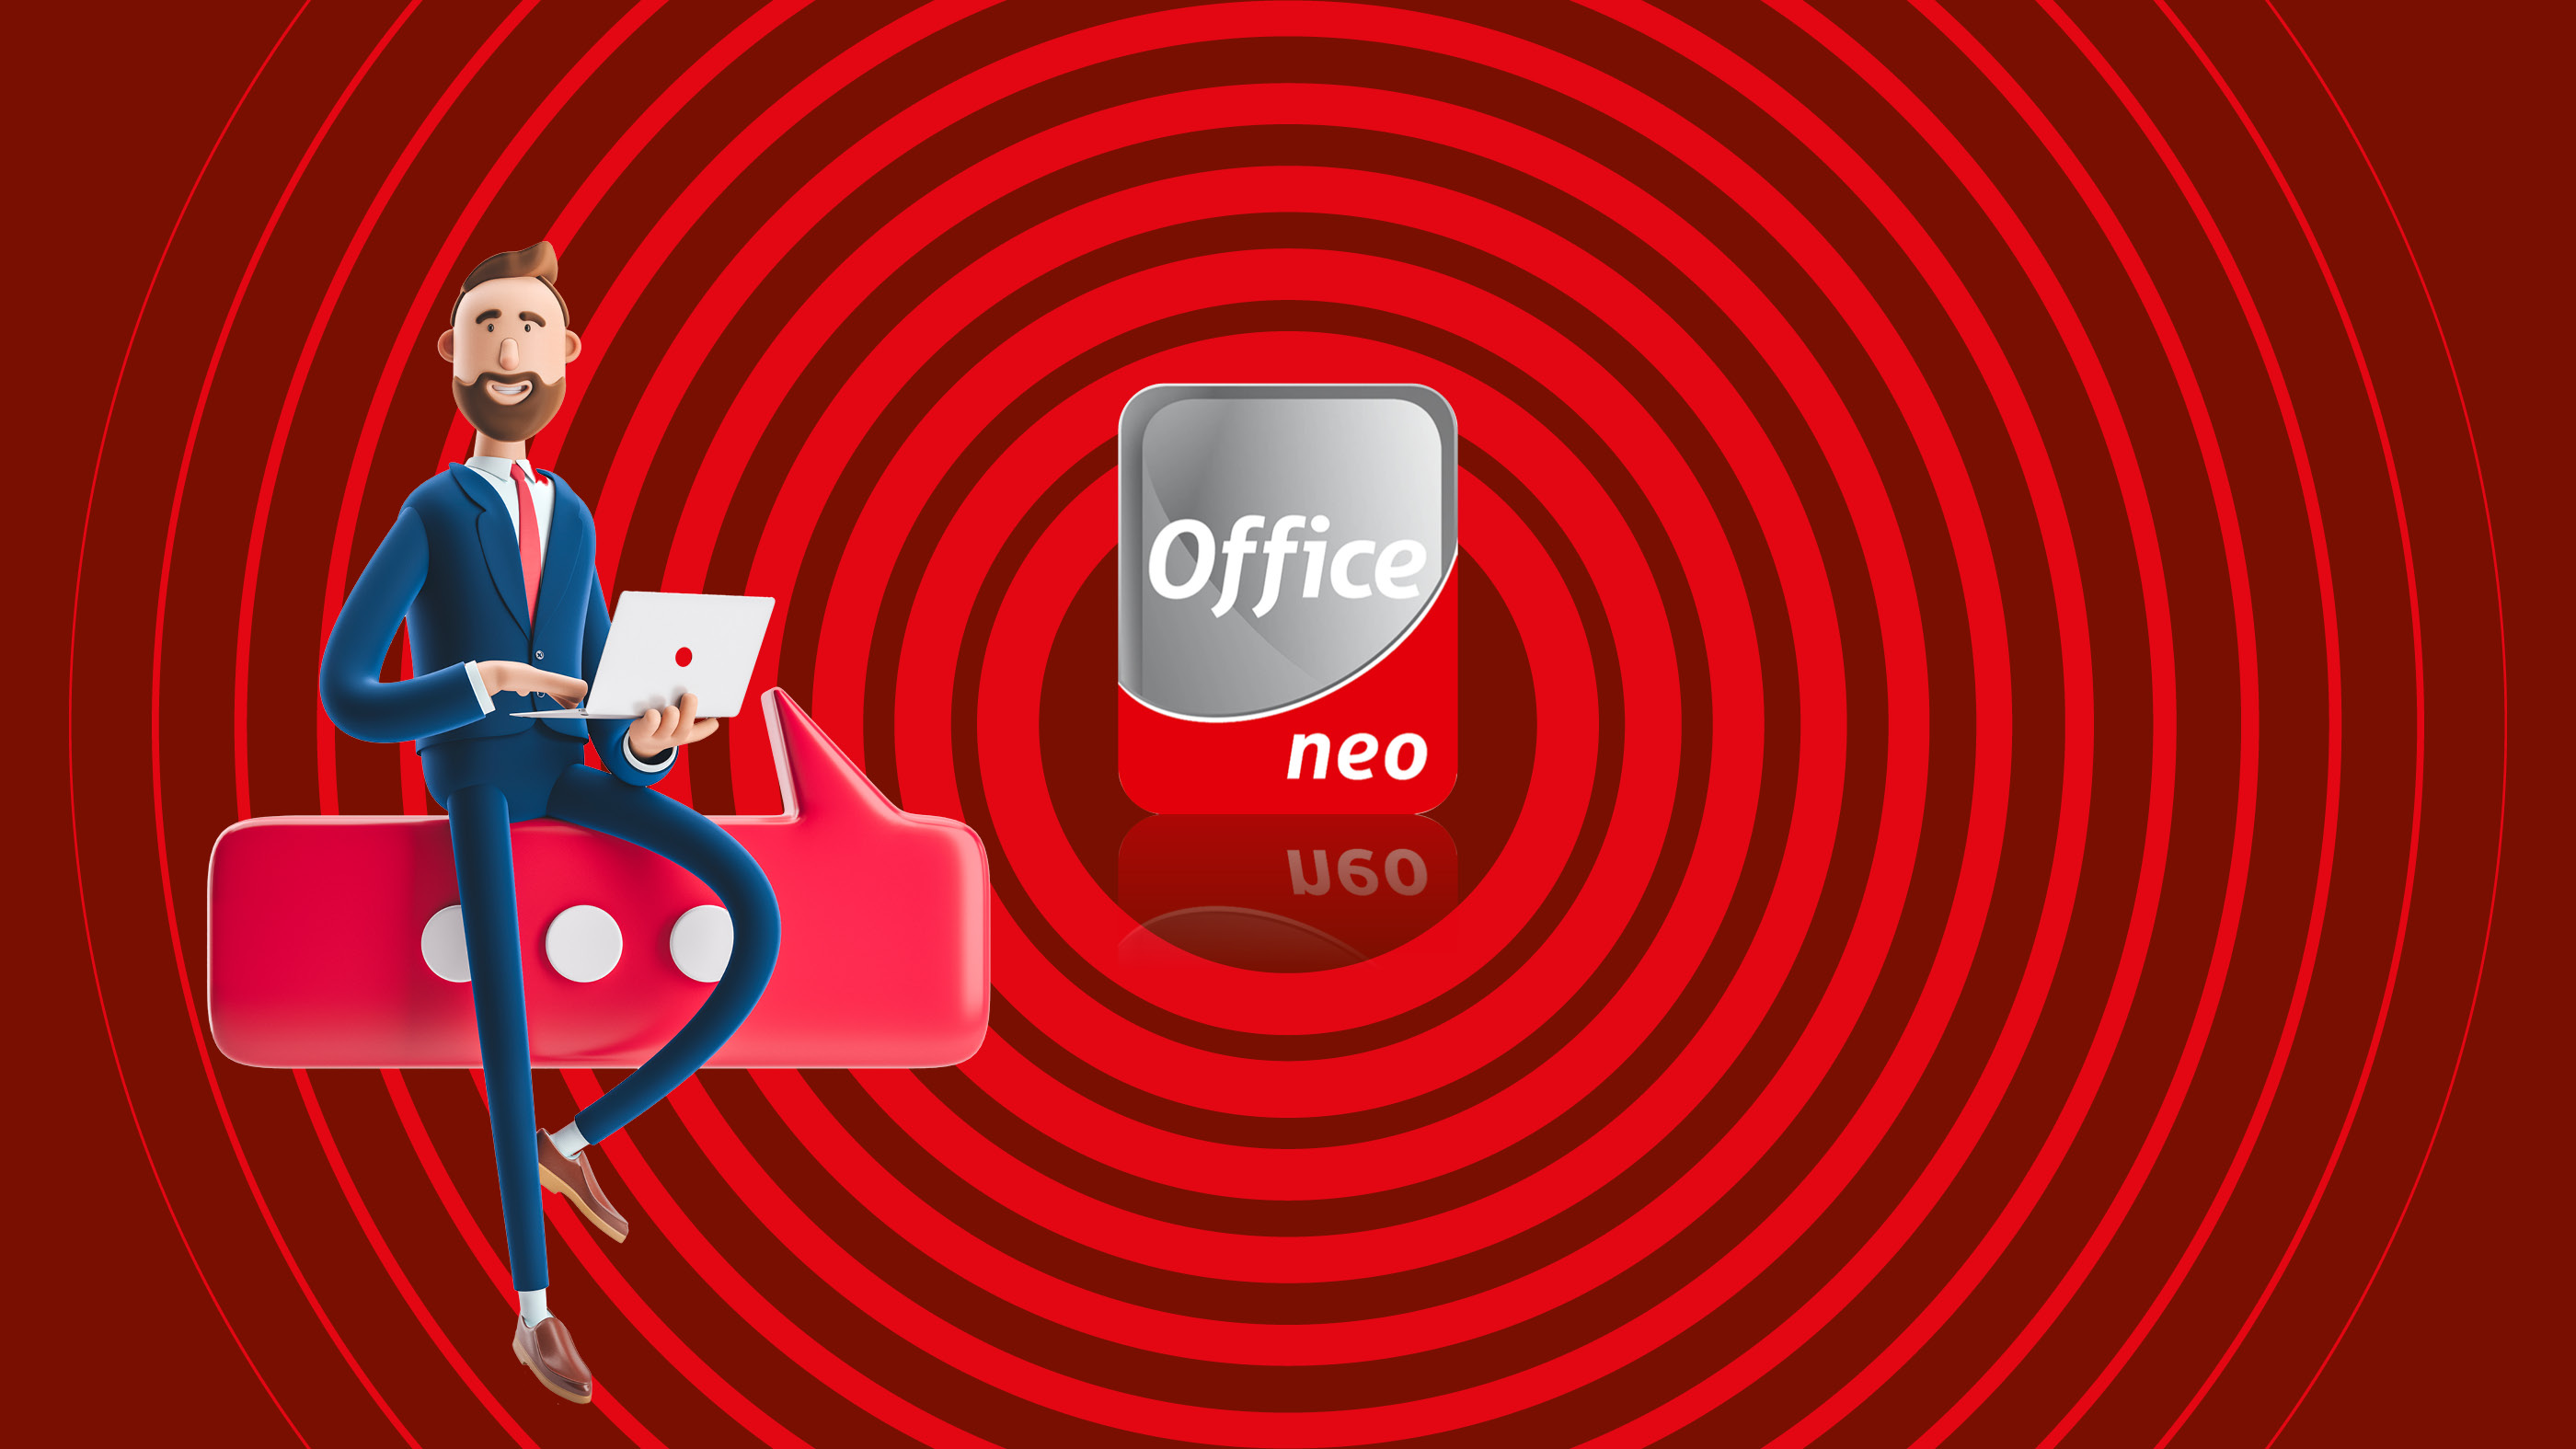 Office_neo Webex 